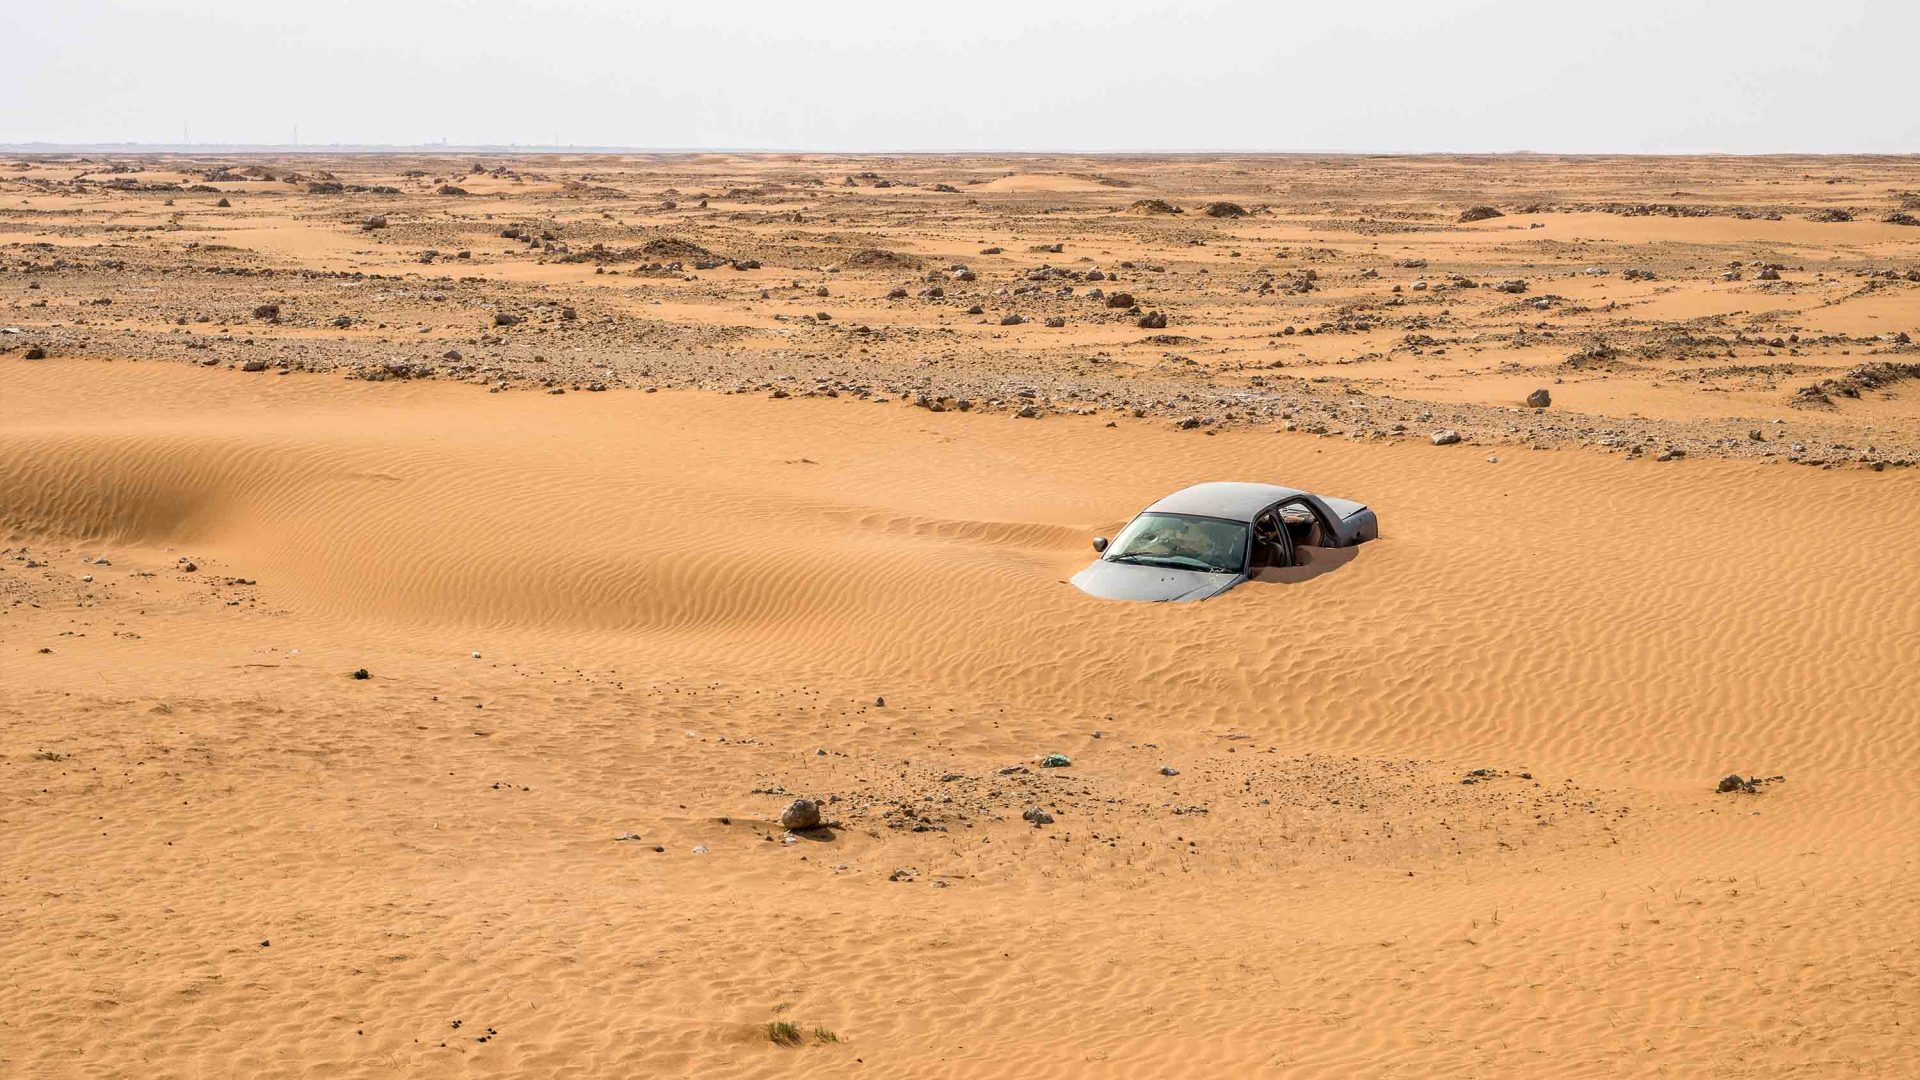 A car sinks underneath the sand in the desert.